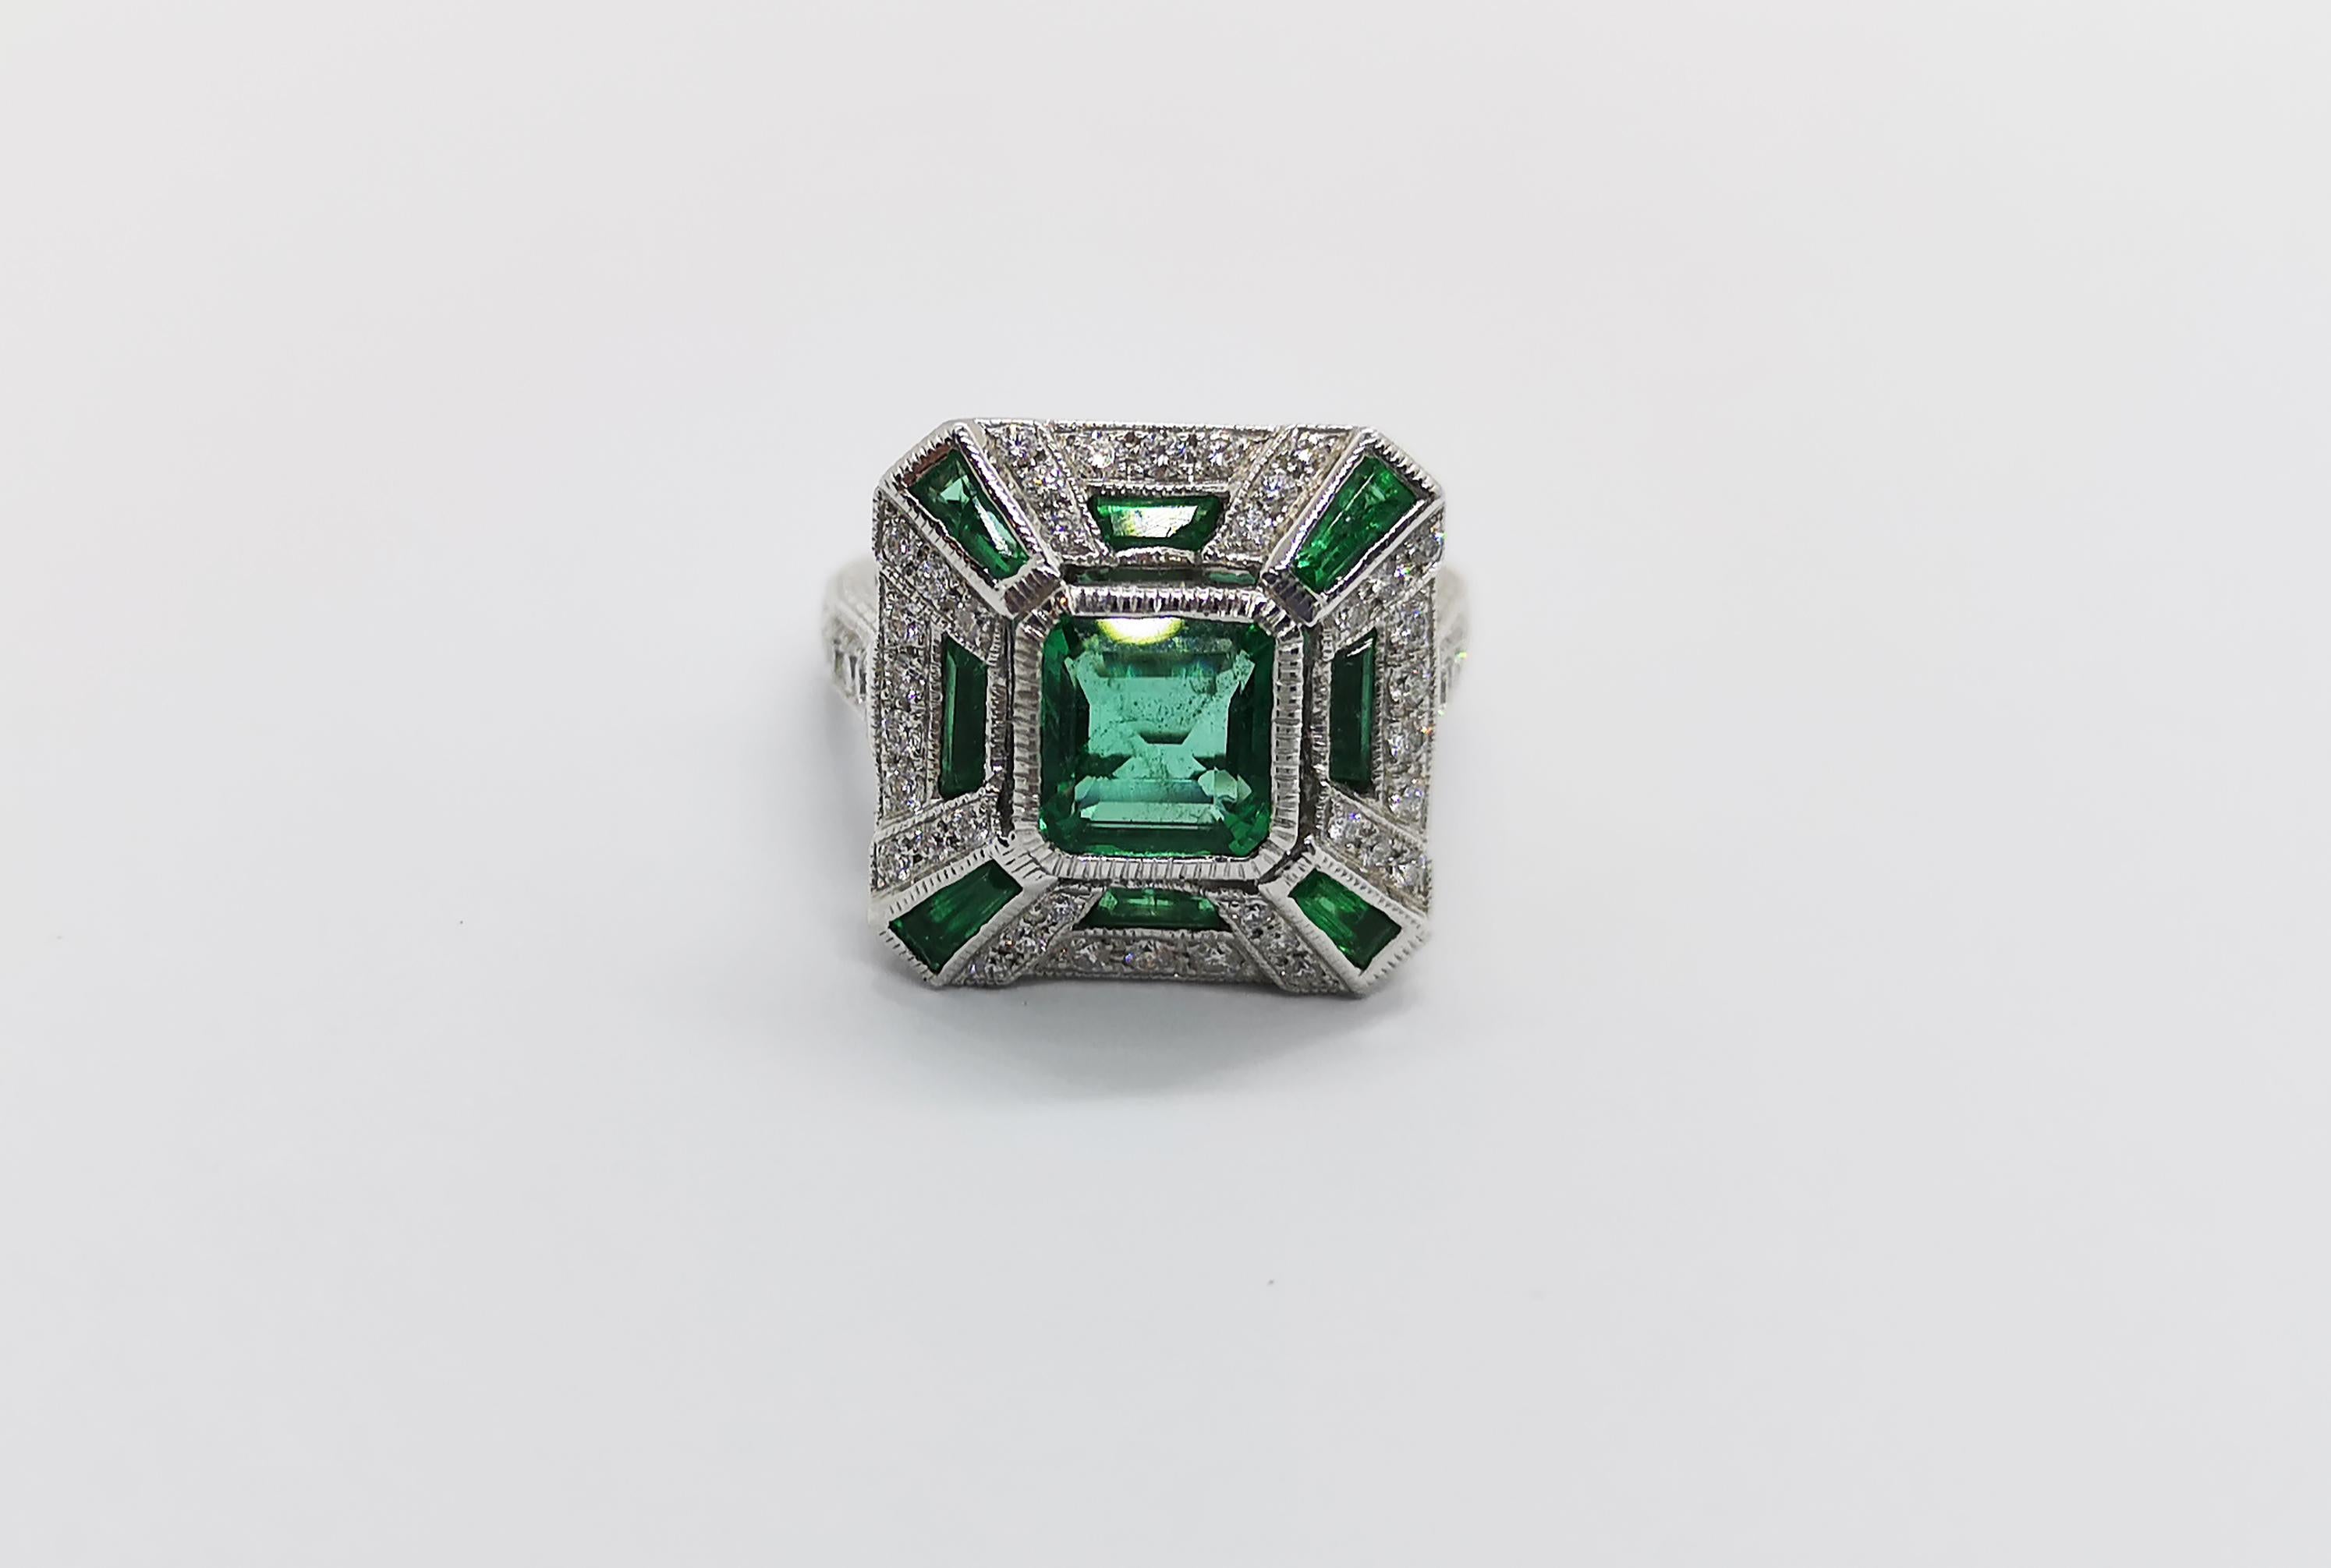 Emerald 1.10 carats, Emerald 1.0 carat with Diamond  0.40 carat Ring Set in 18 Karat White Gold Settings 

Width: 1.5 cm
Length: 1.5 cm 
Ring Size: 50

